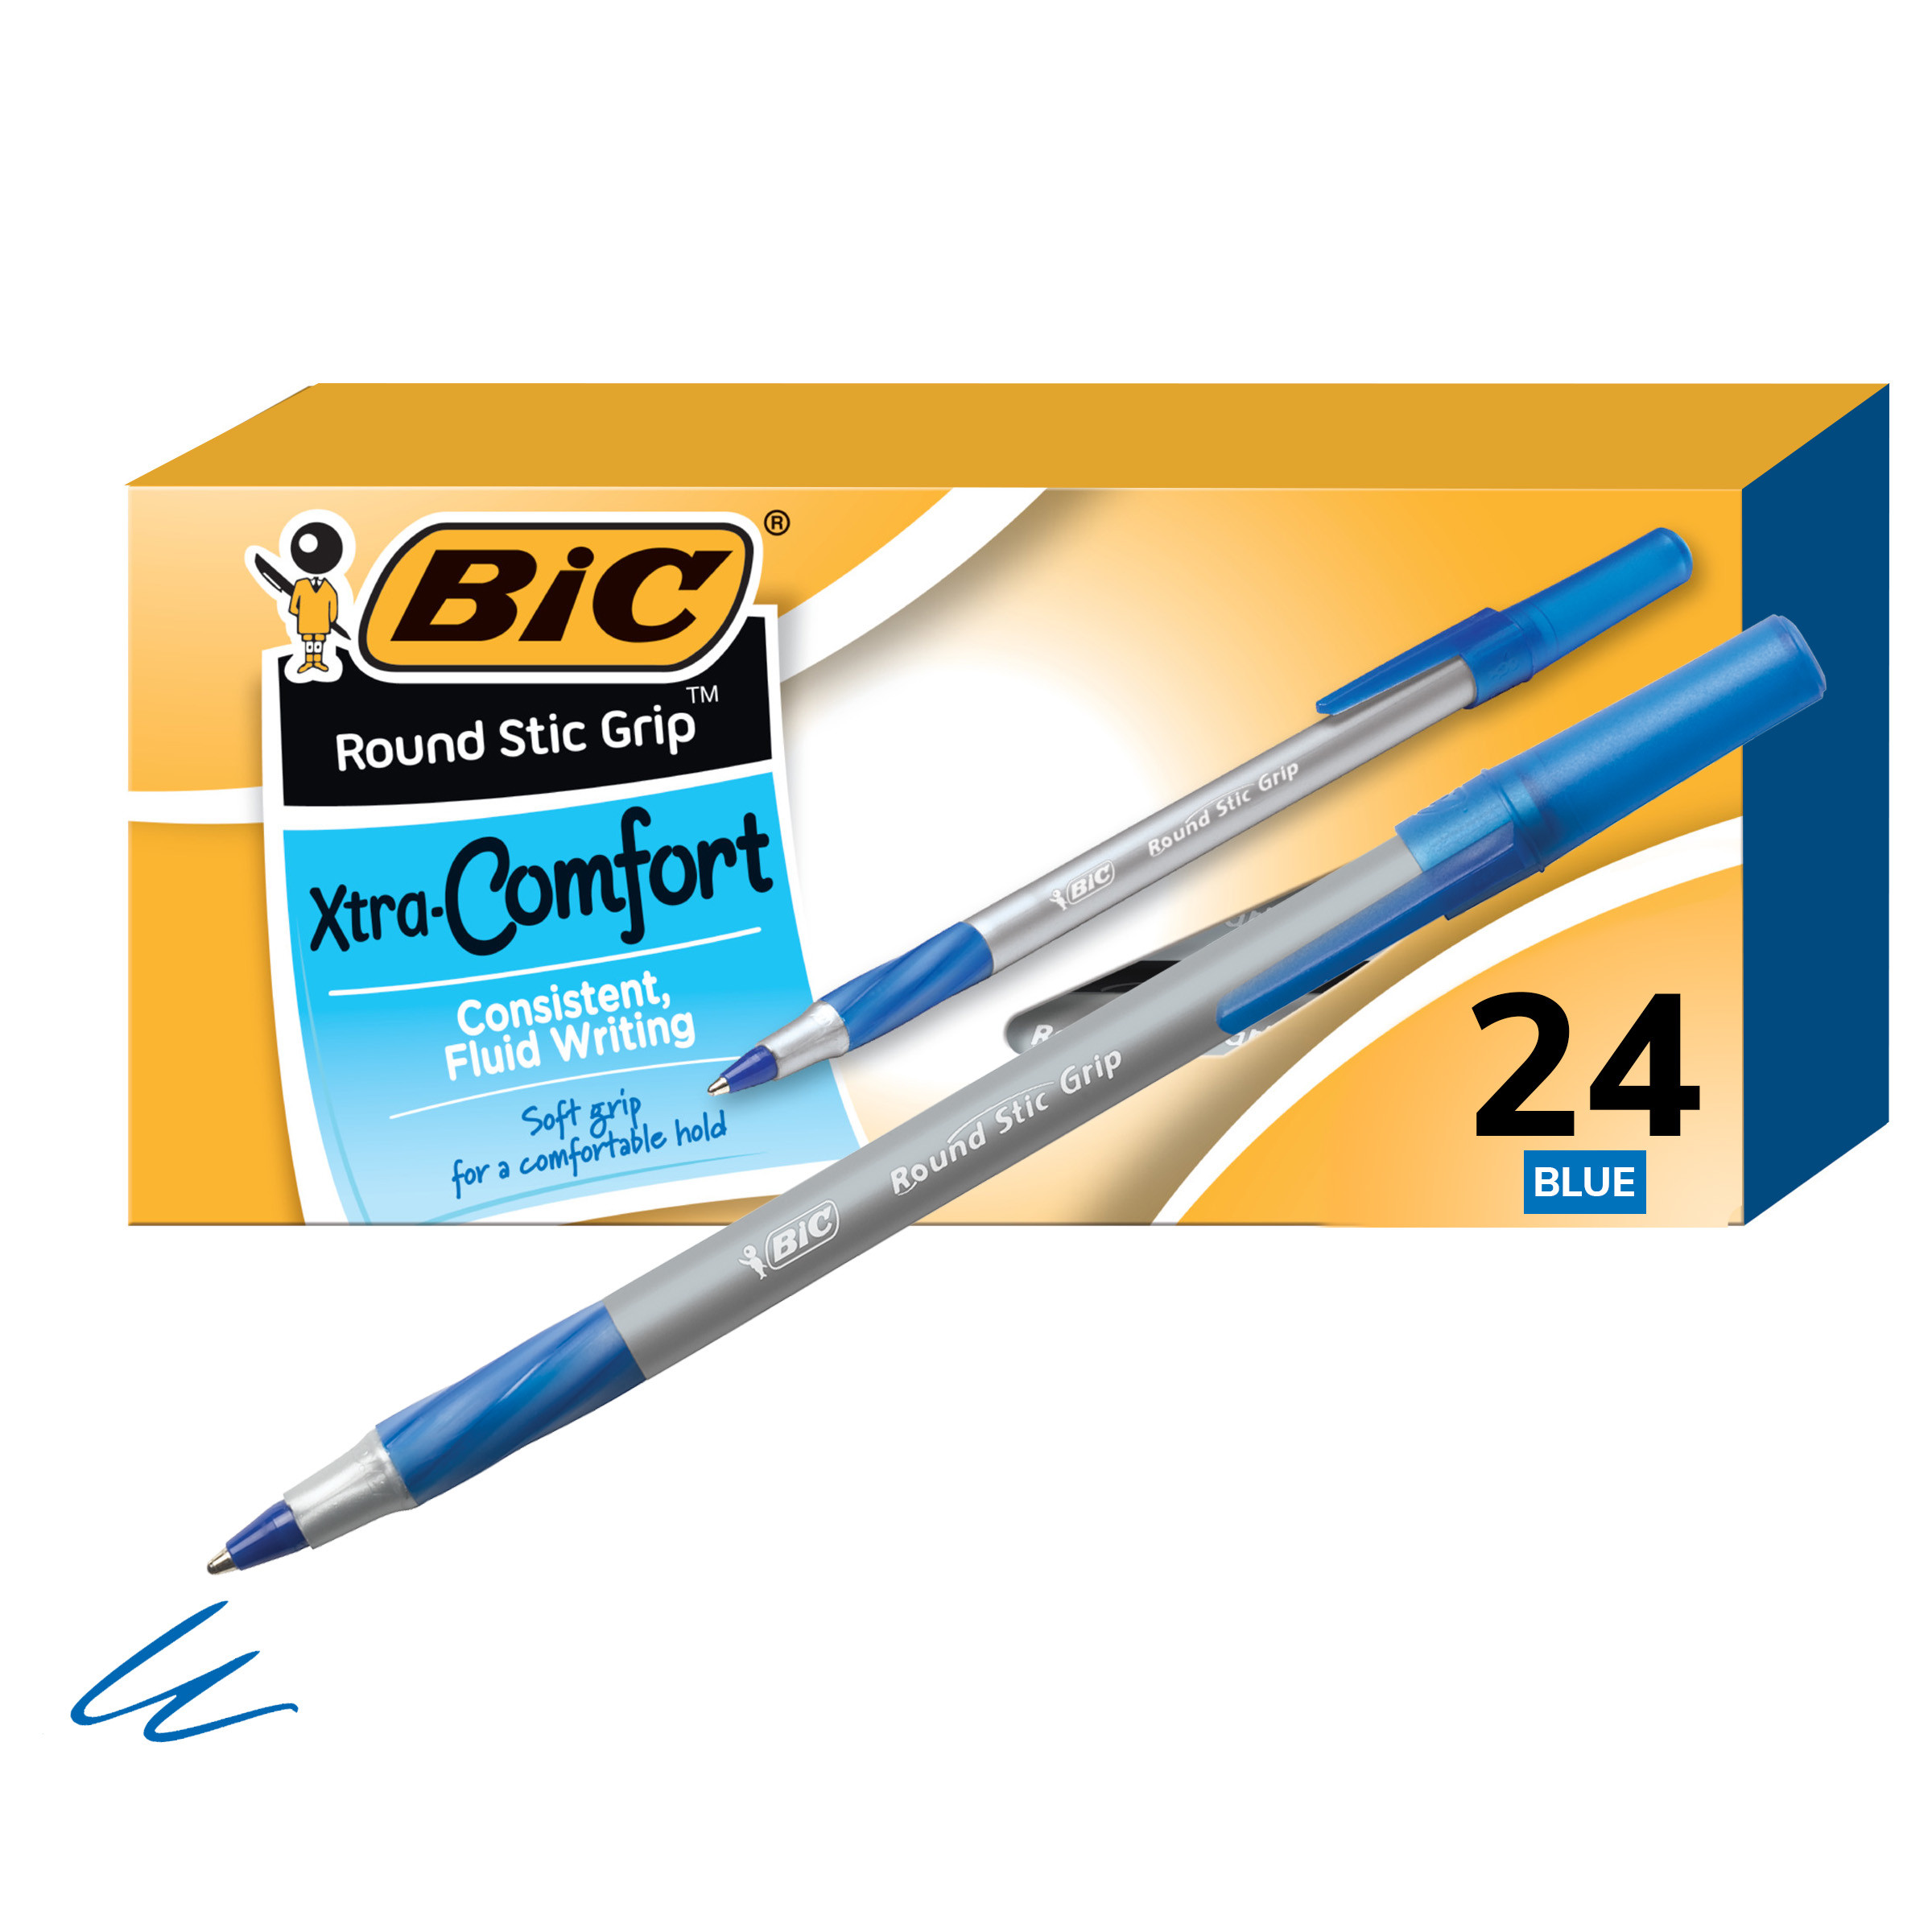 BIC Round Stic Grip Xtra Comfort Ballpoint Pen, Classic Medium Point (1.2 mm), Box of 24 Blue Pens - image 1 of 14